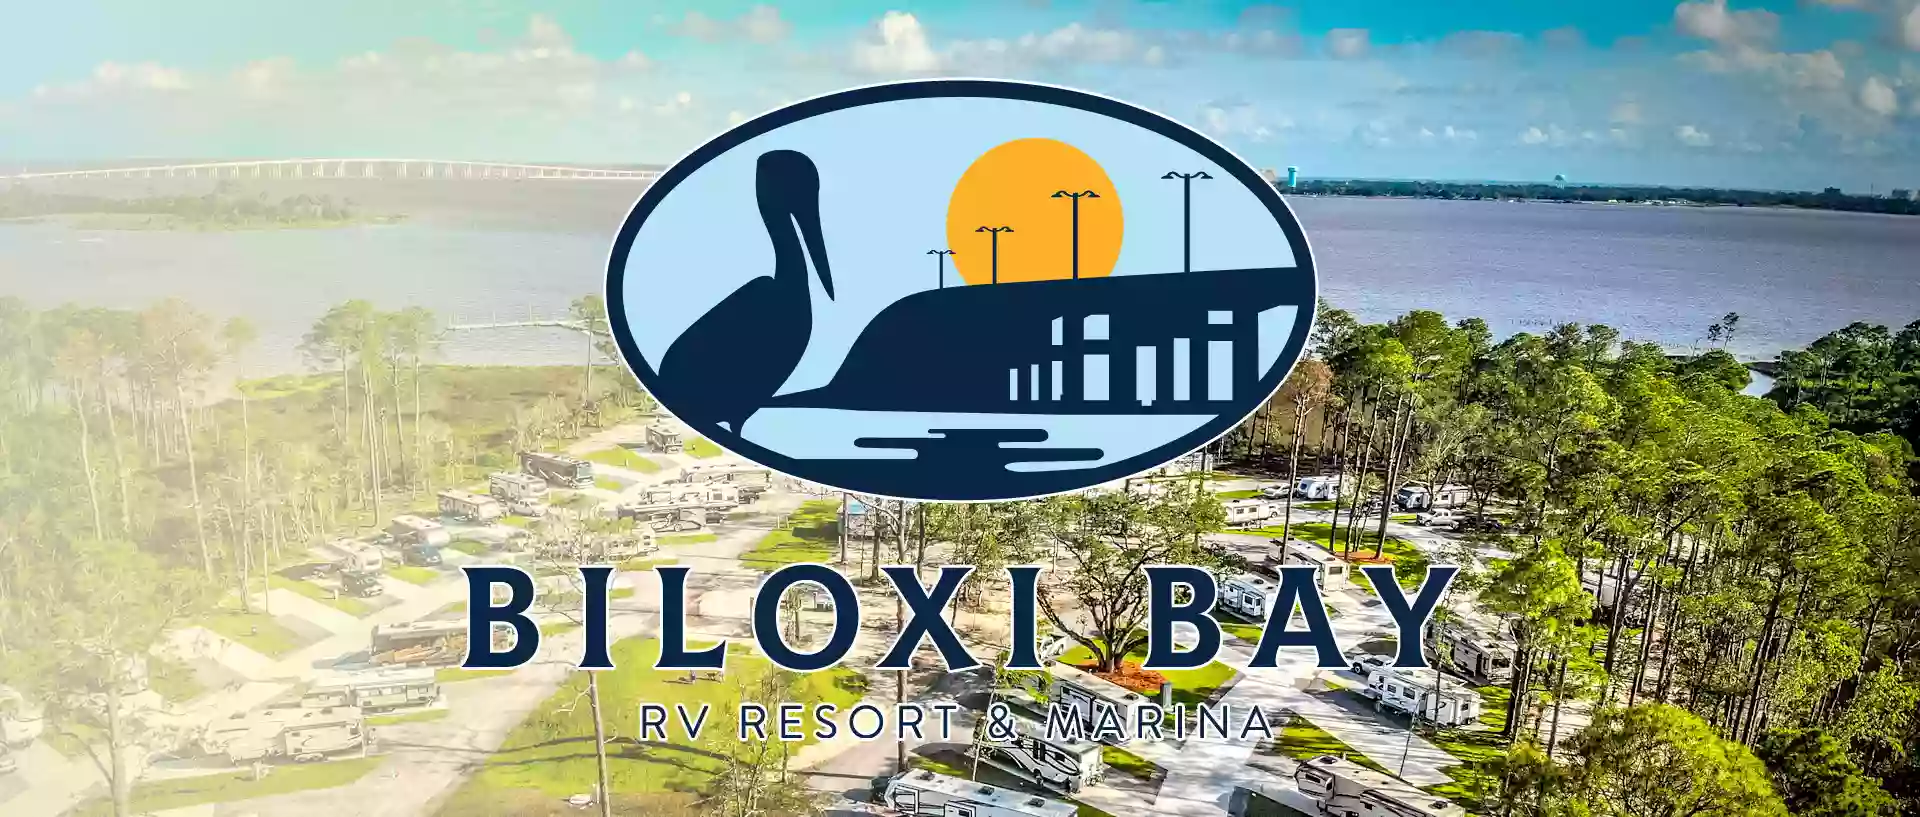 Biloxi Bay RV Resort and Marina